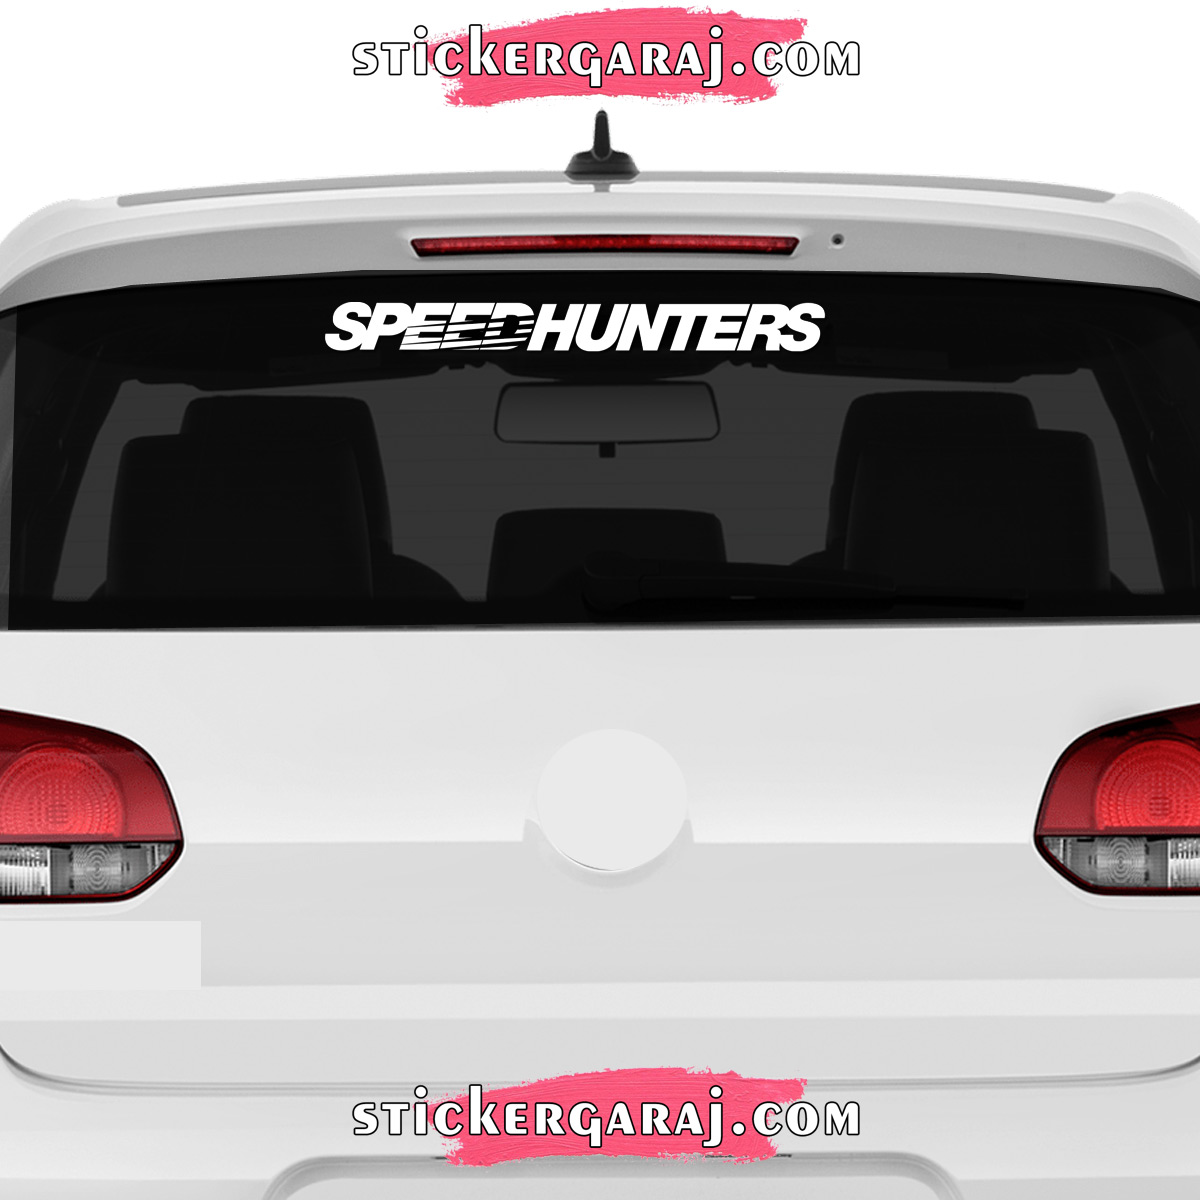 Dacia cam sticker - Dacia cam sticker - speedhunters